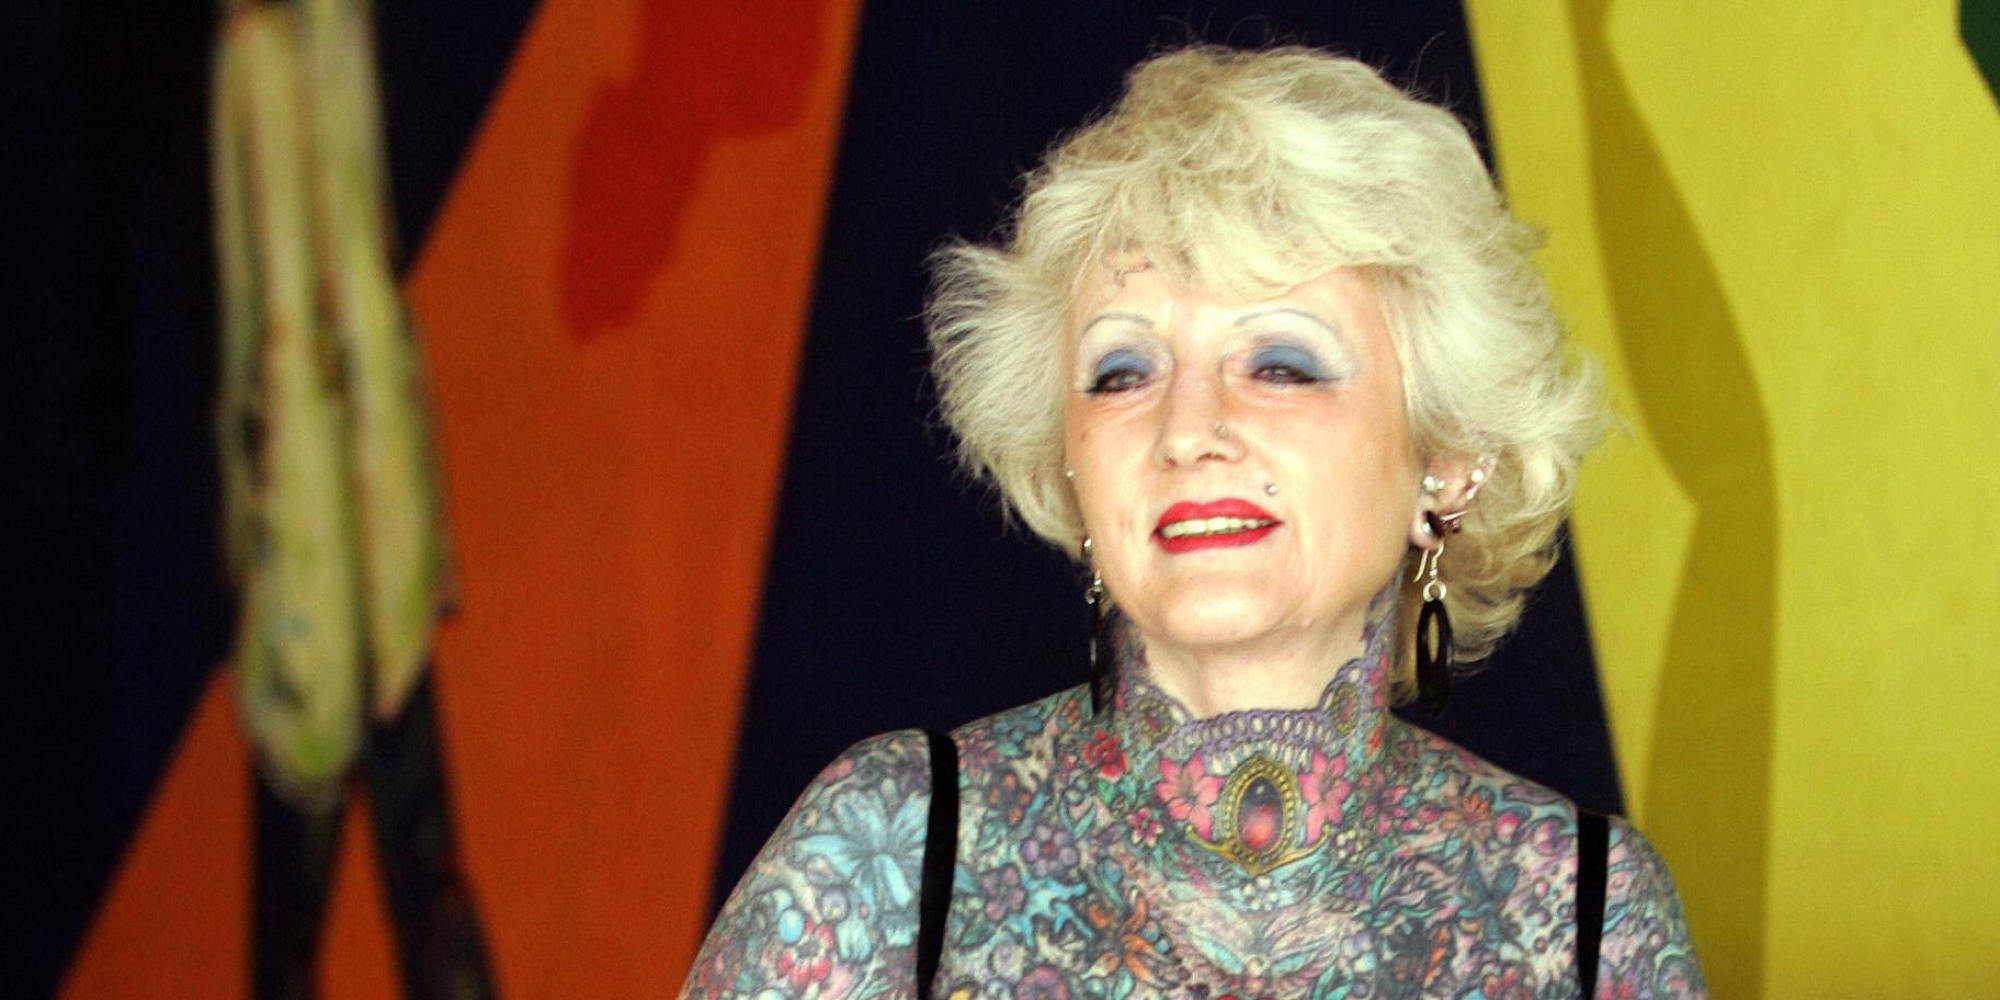 Isobel Varley Worlds Most Tattooed Female Senior Remembered Huffpost 